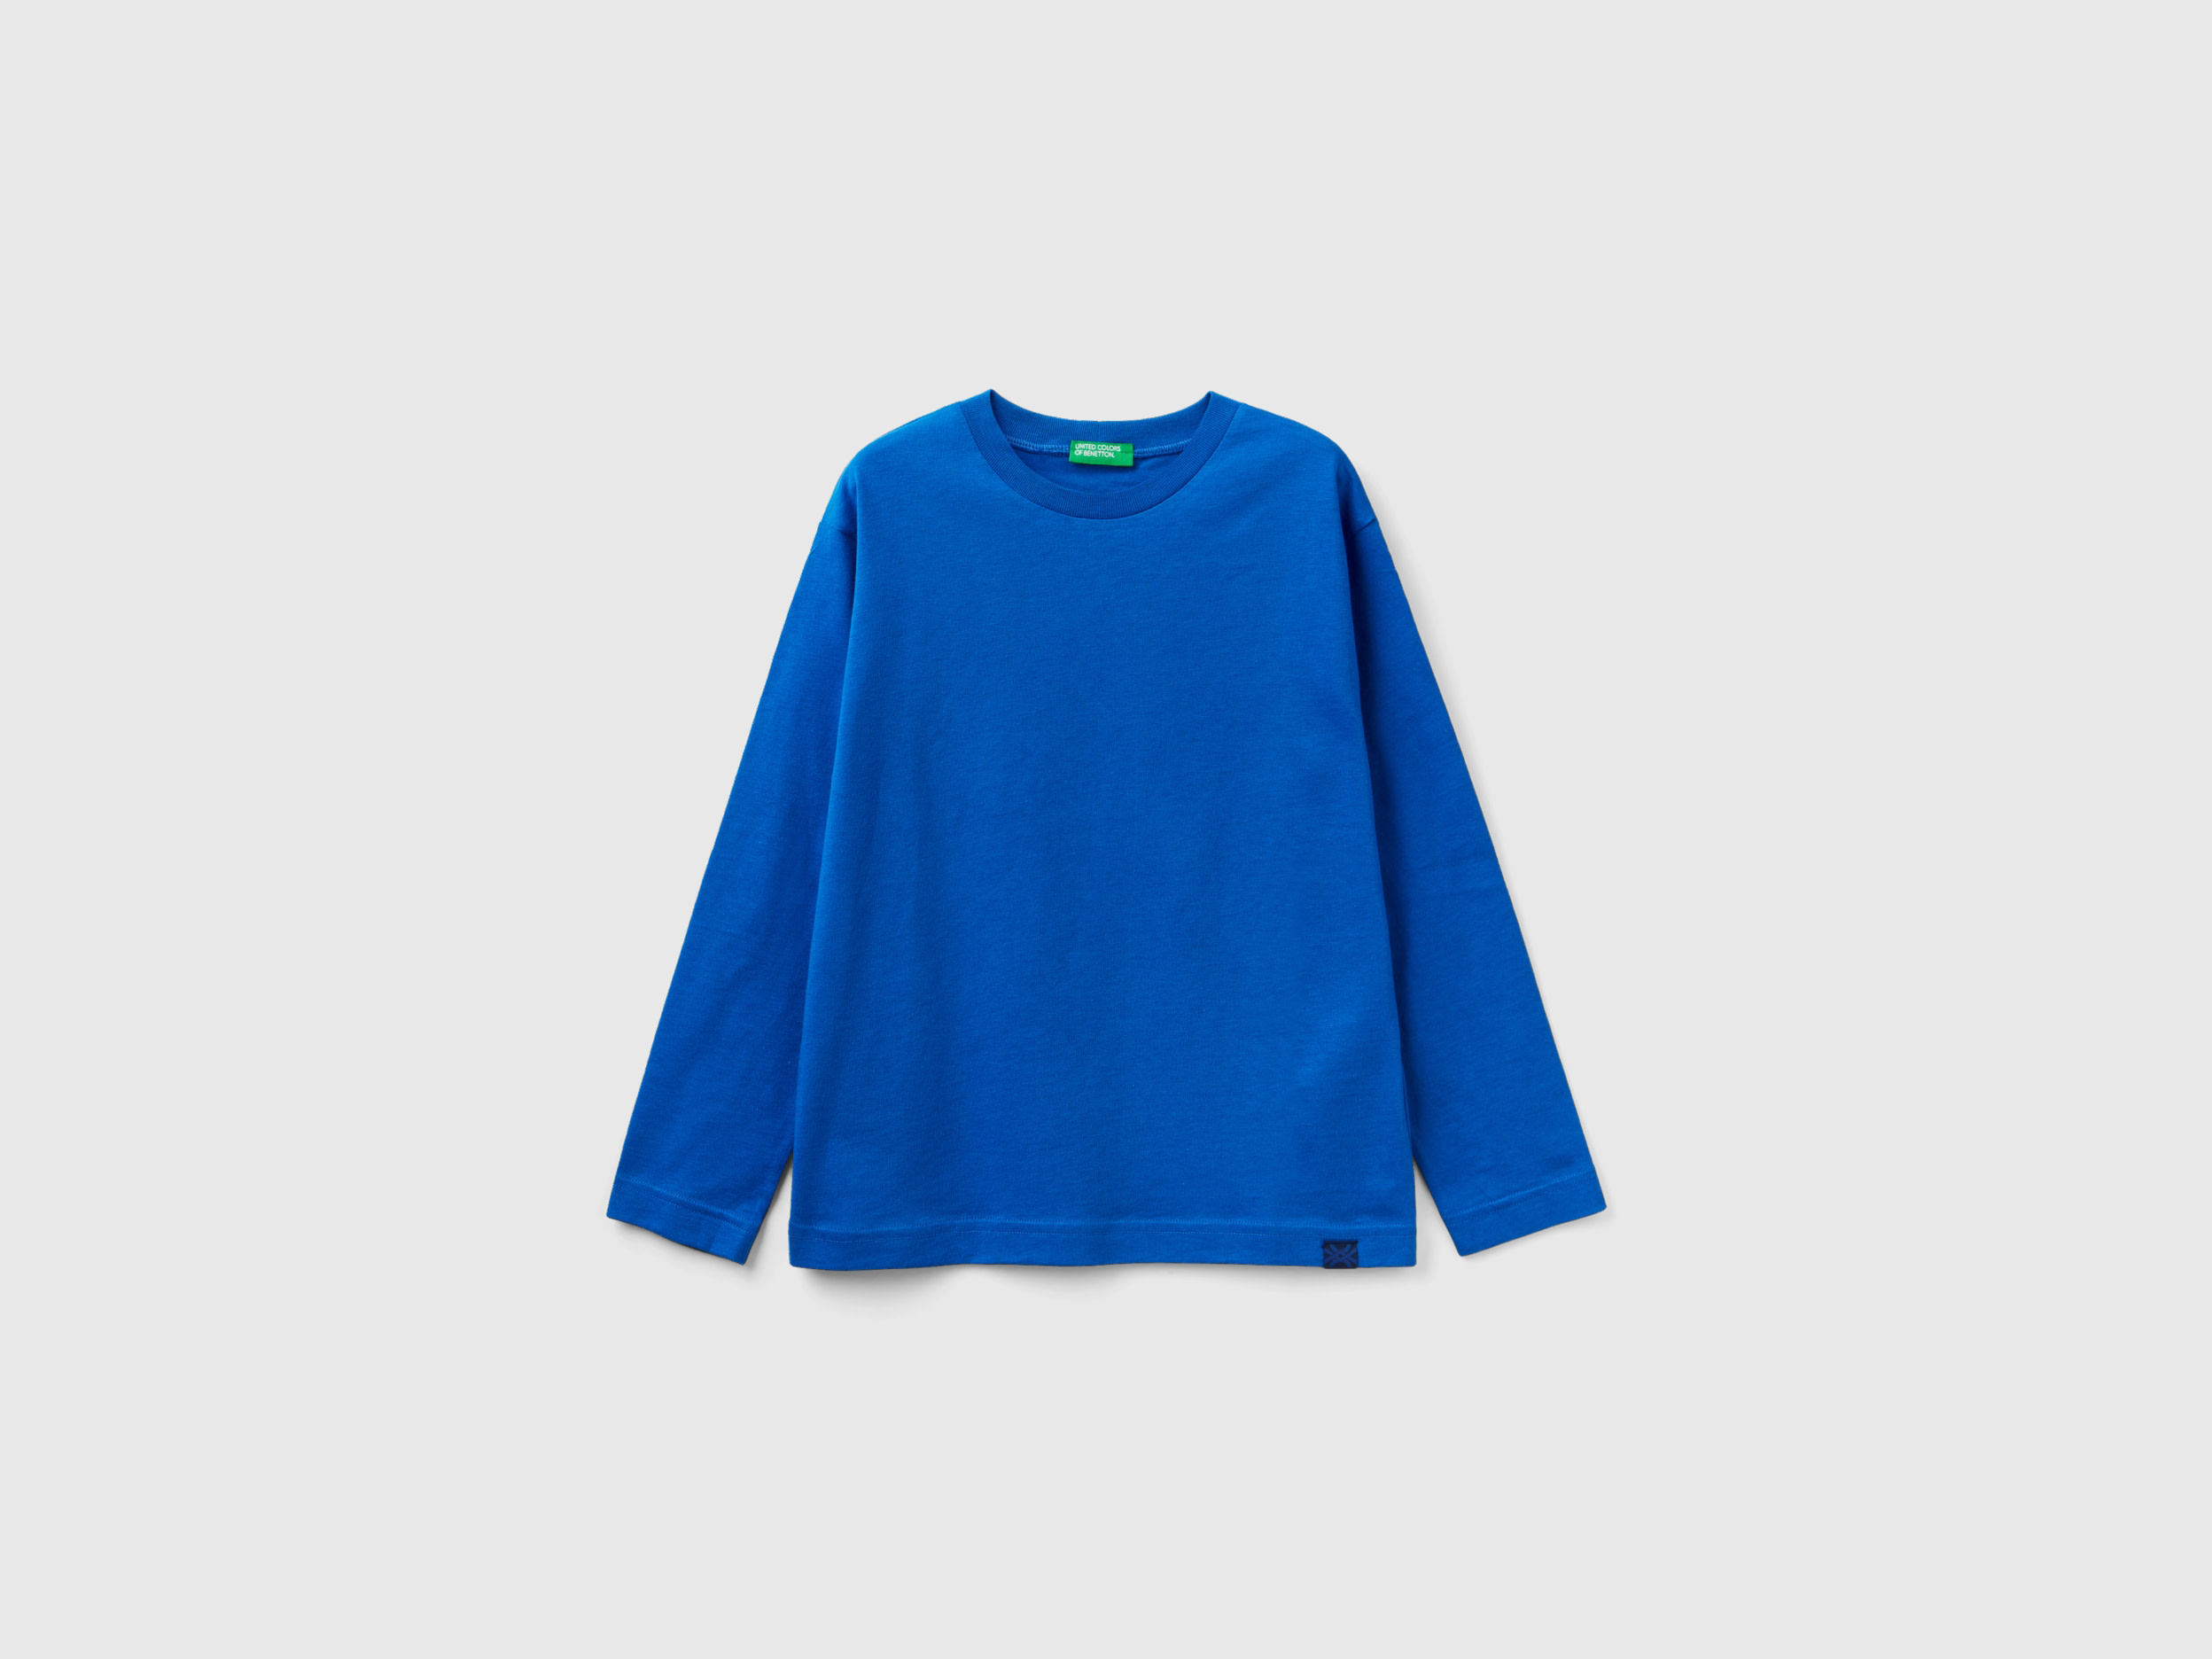 Benetton, 100% Organic Cotton Crew Neck T-shirt, size 3XL, Bright Blue, Kids